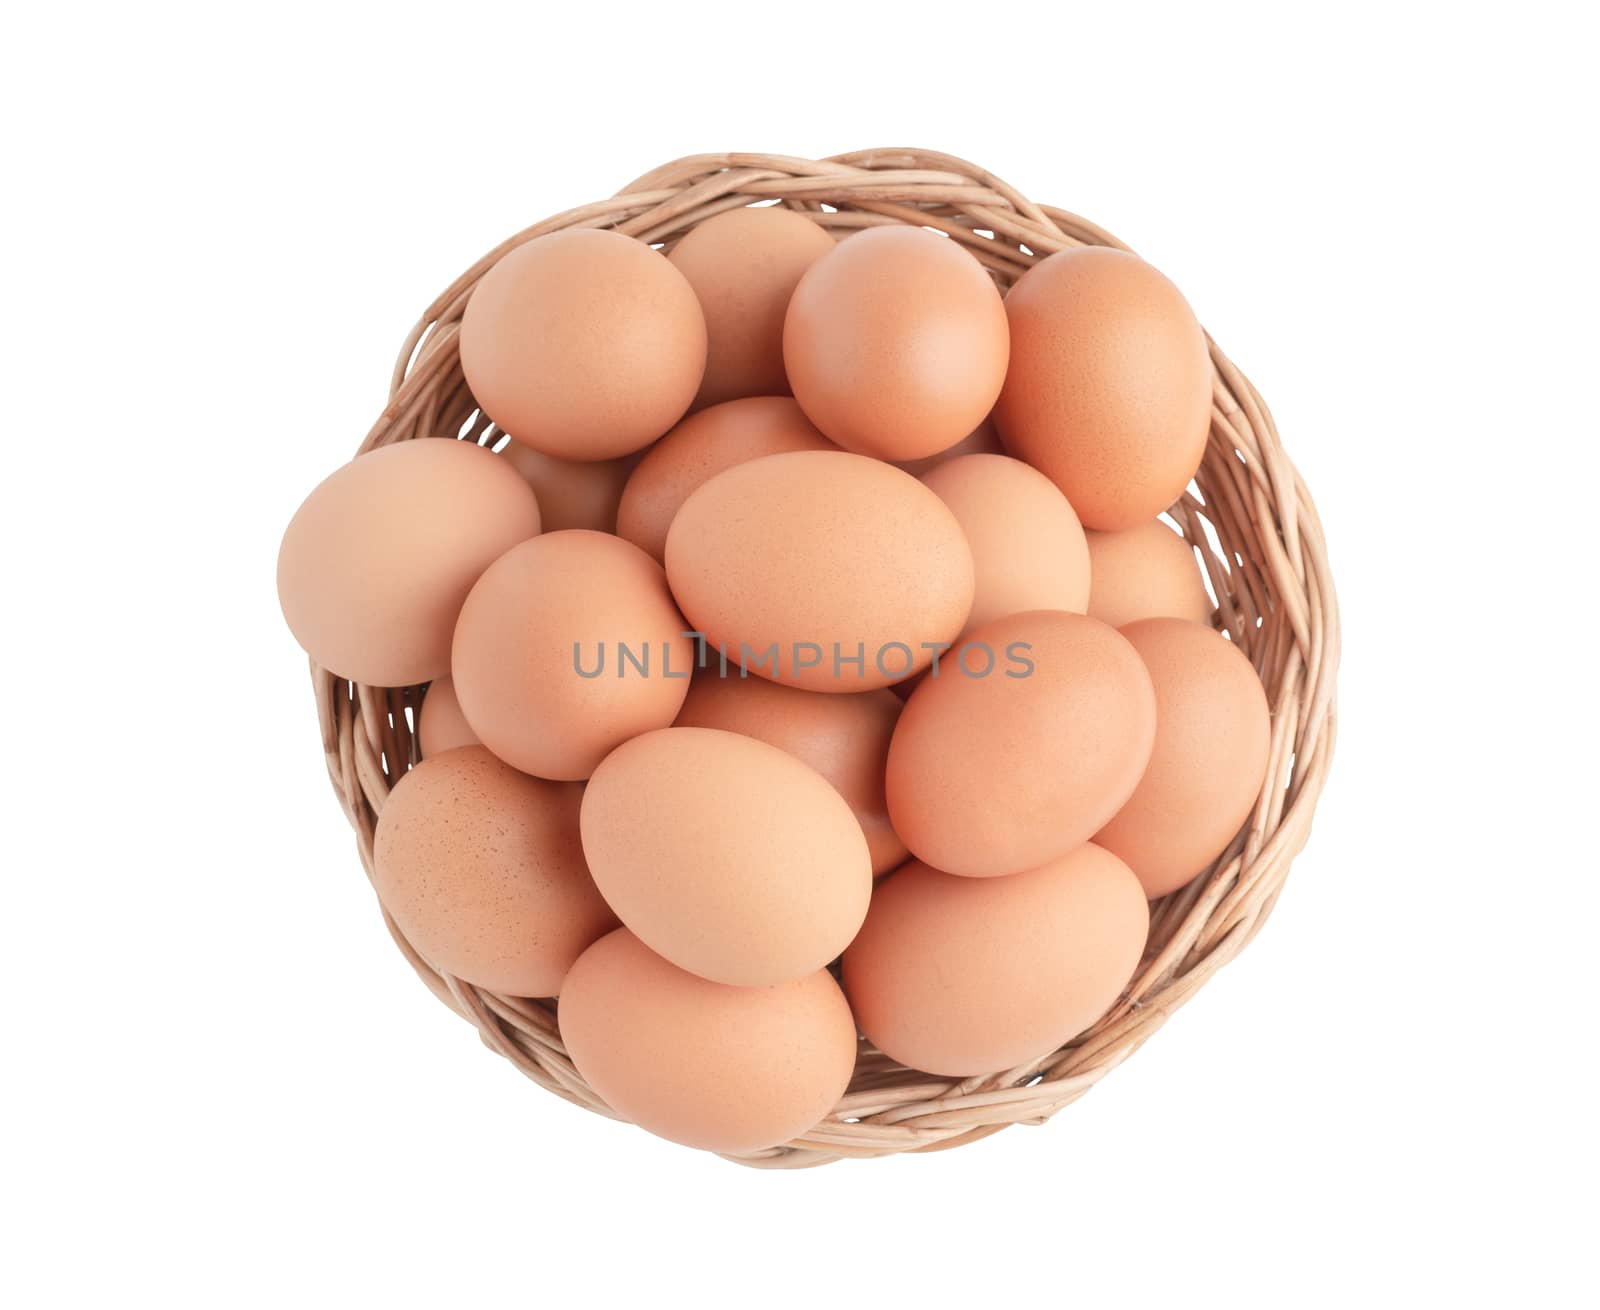 Top view chicken eggs in the wicker basket by Nikkikii